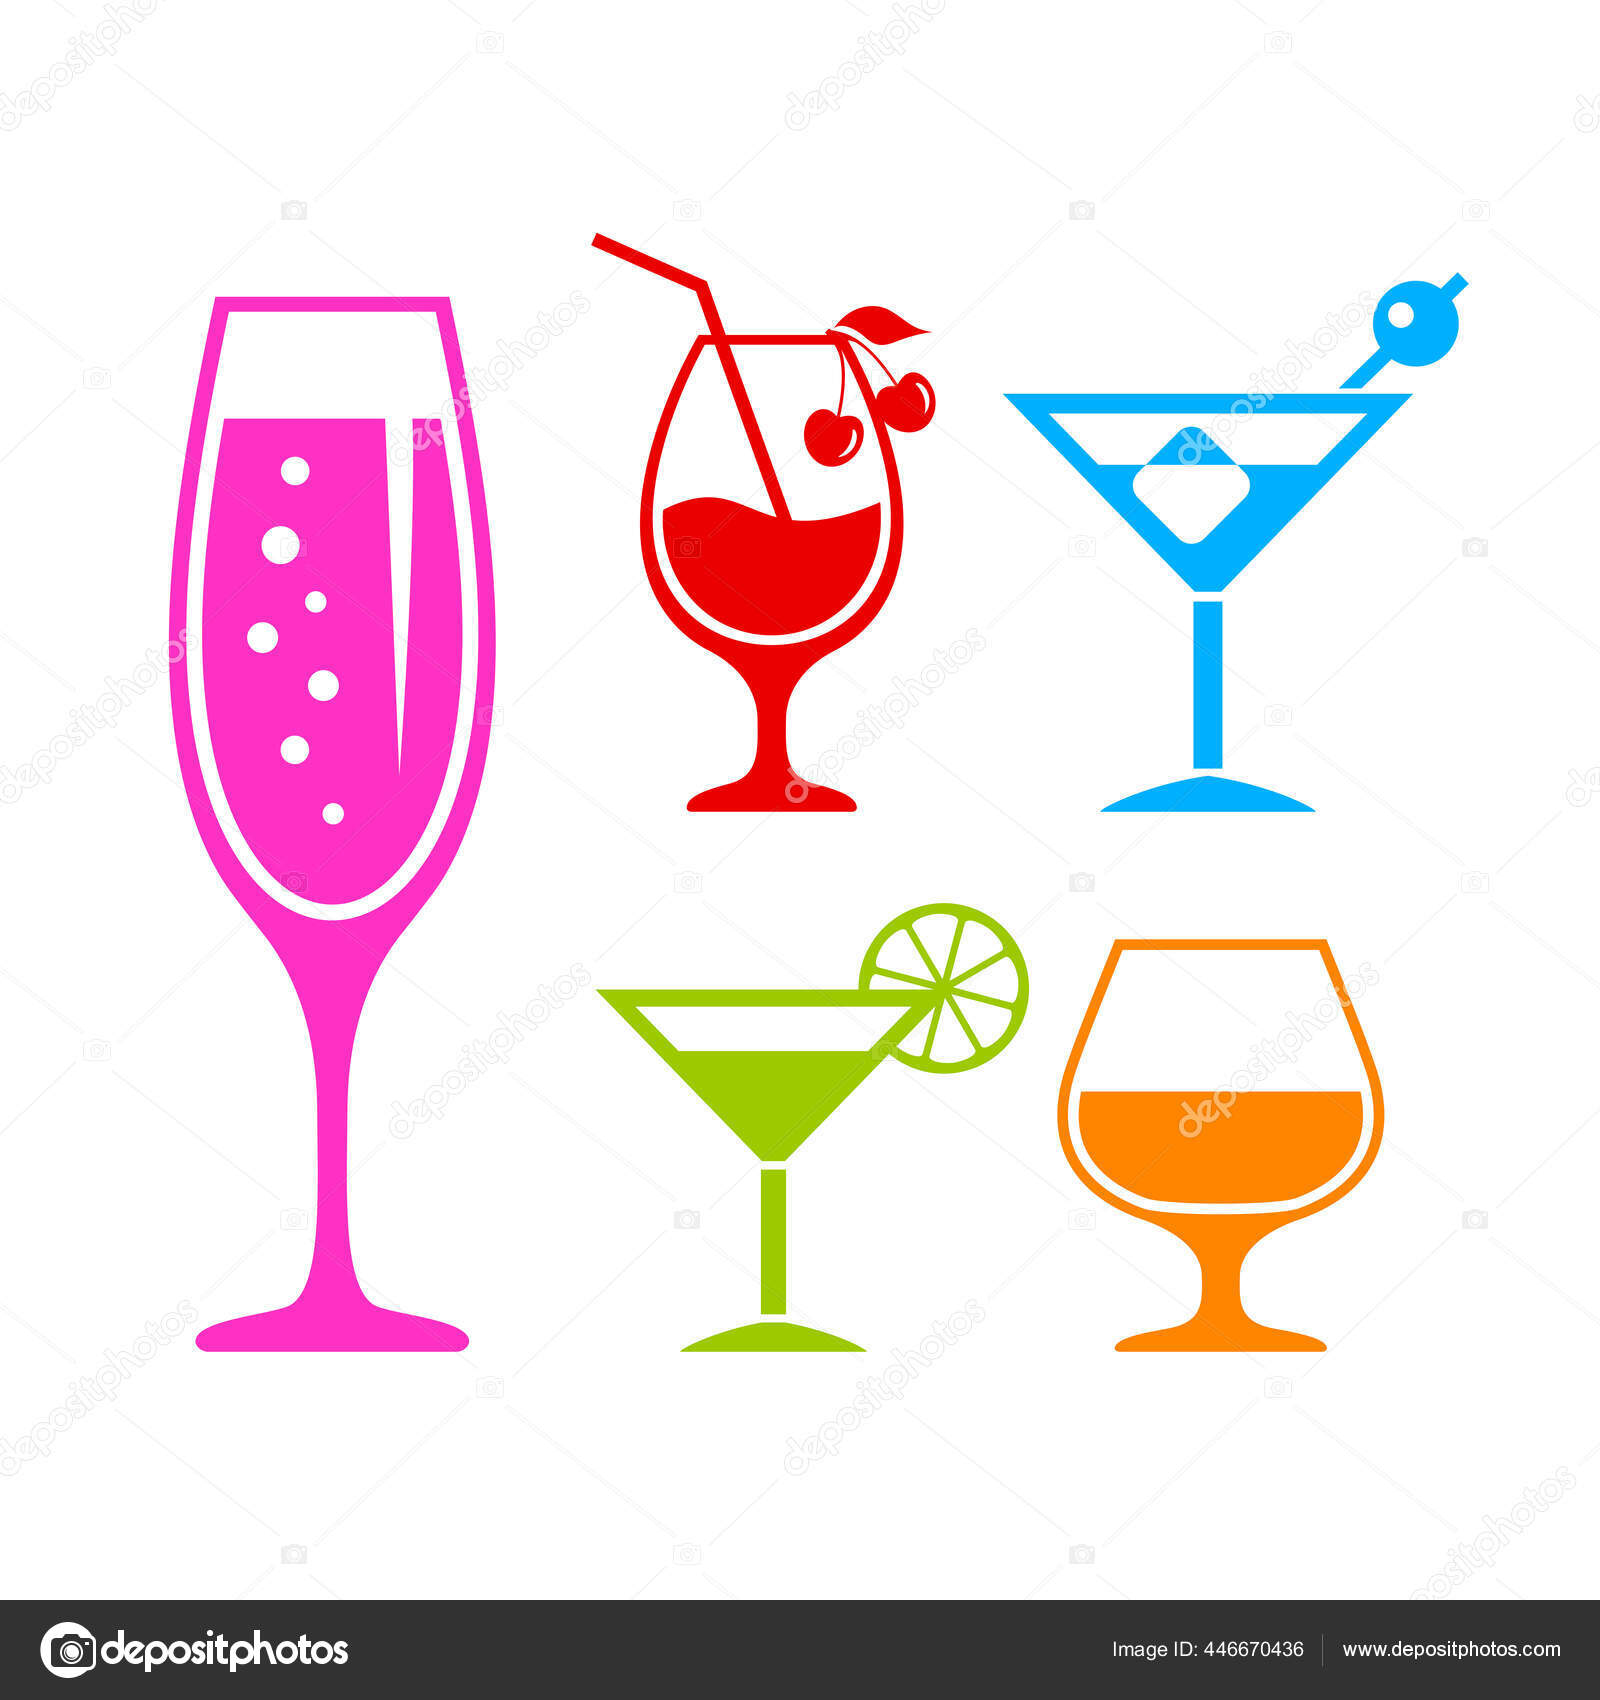 https://st2.depositphotos.com/1431107/44667/v/1600/depositphotos_446670436-stock-illustration-alcoholic-cocktail-vector-icon-set.jpg